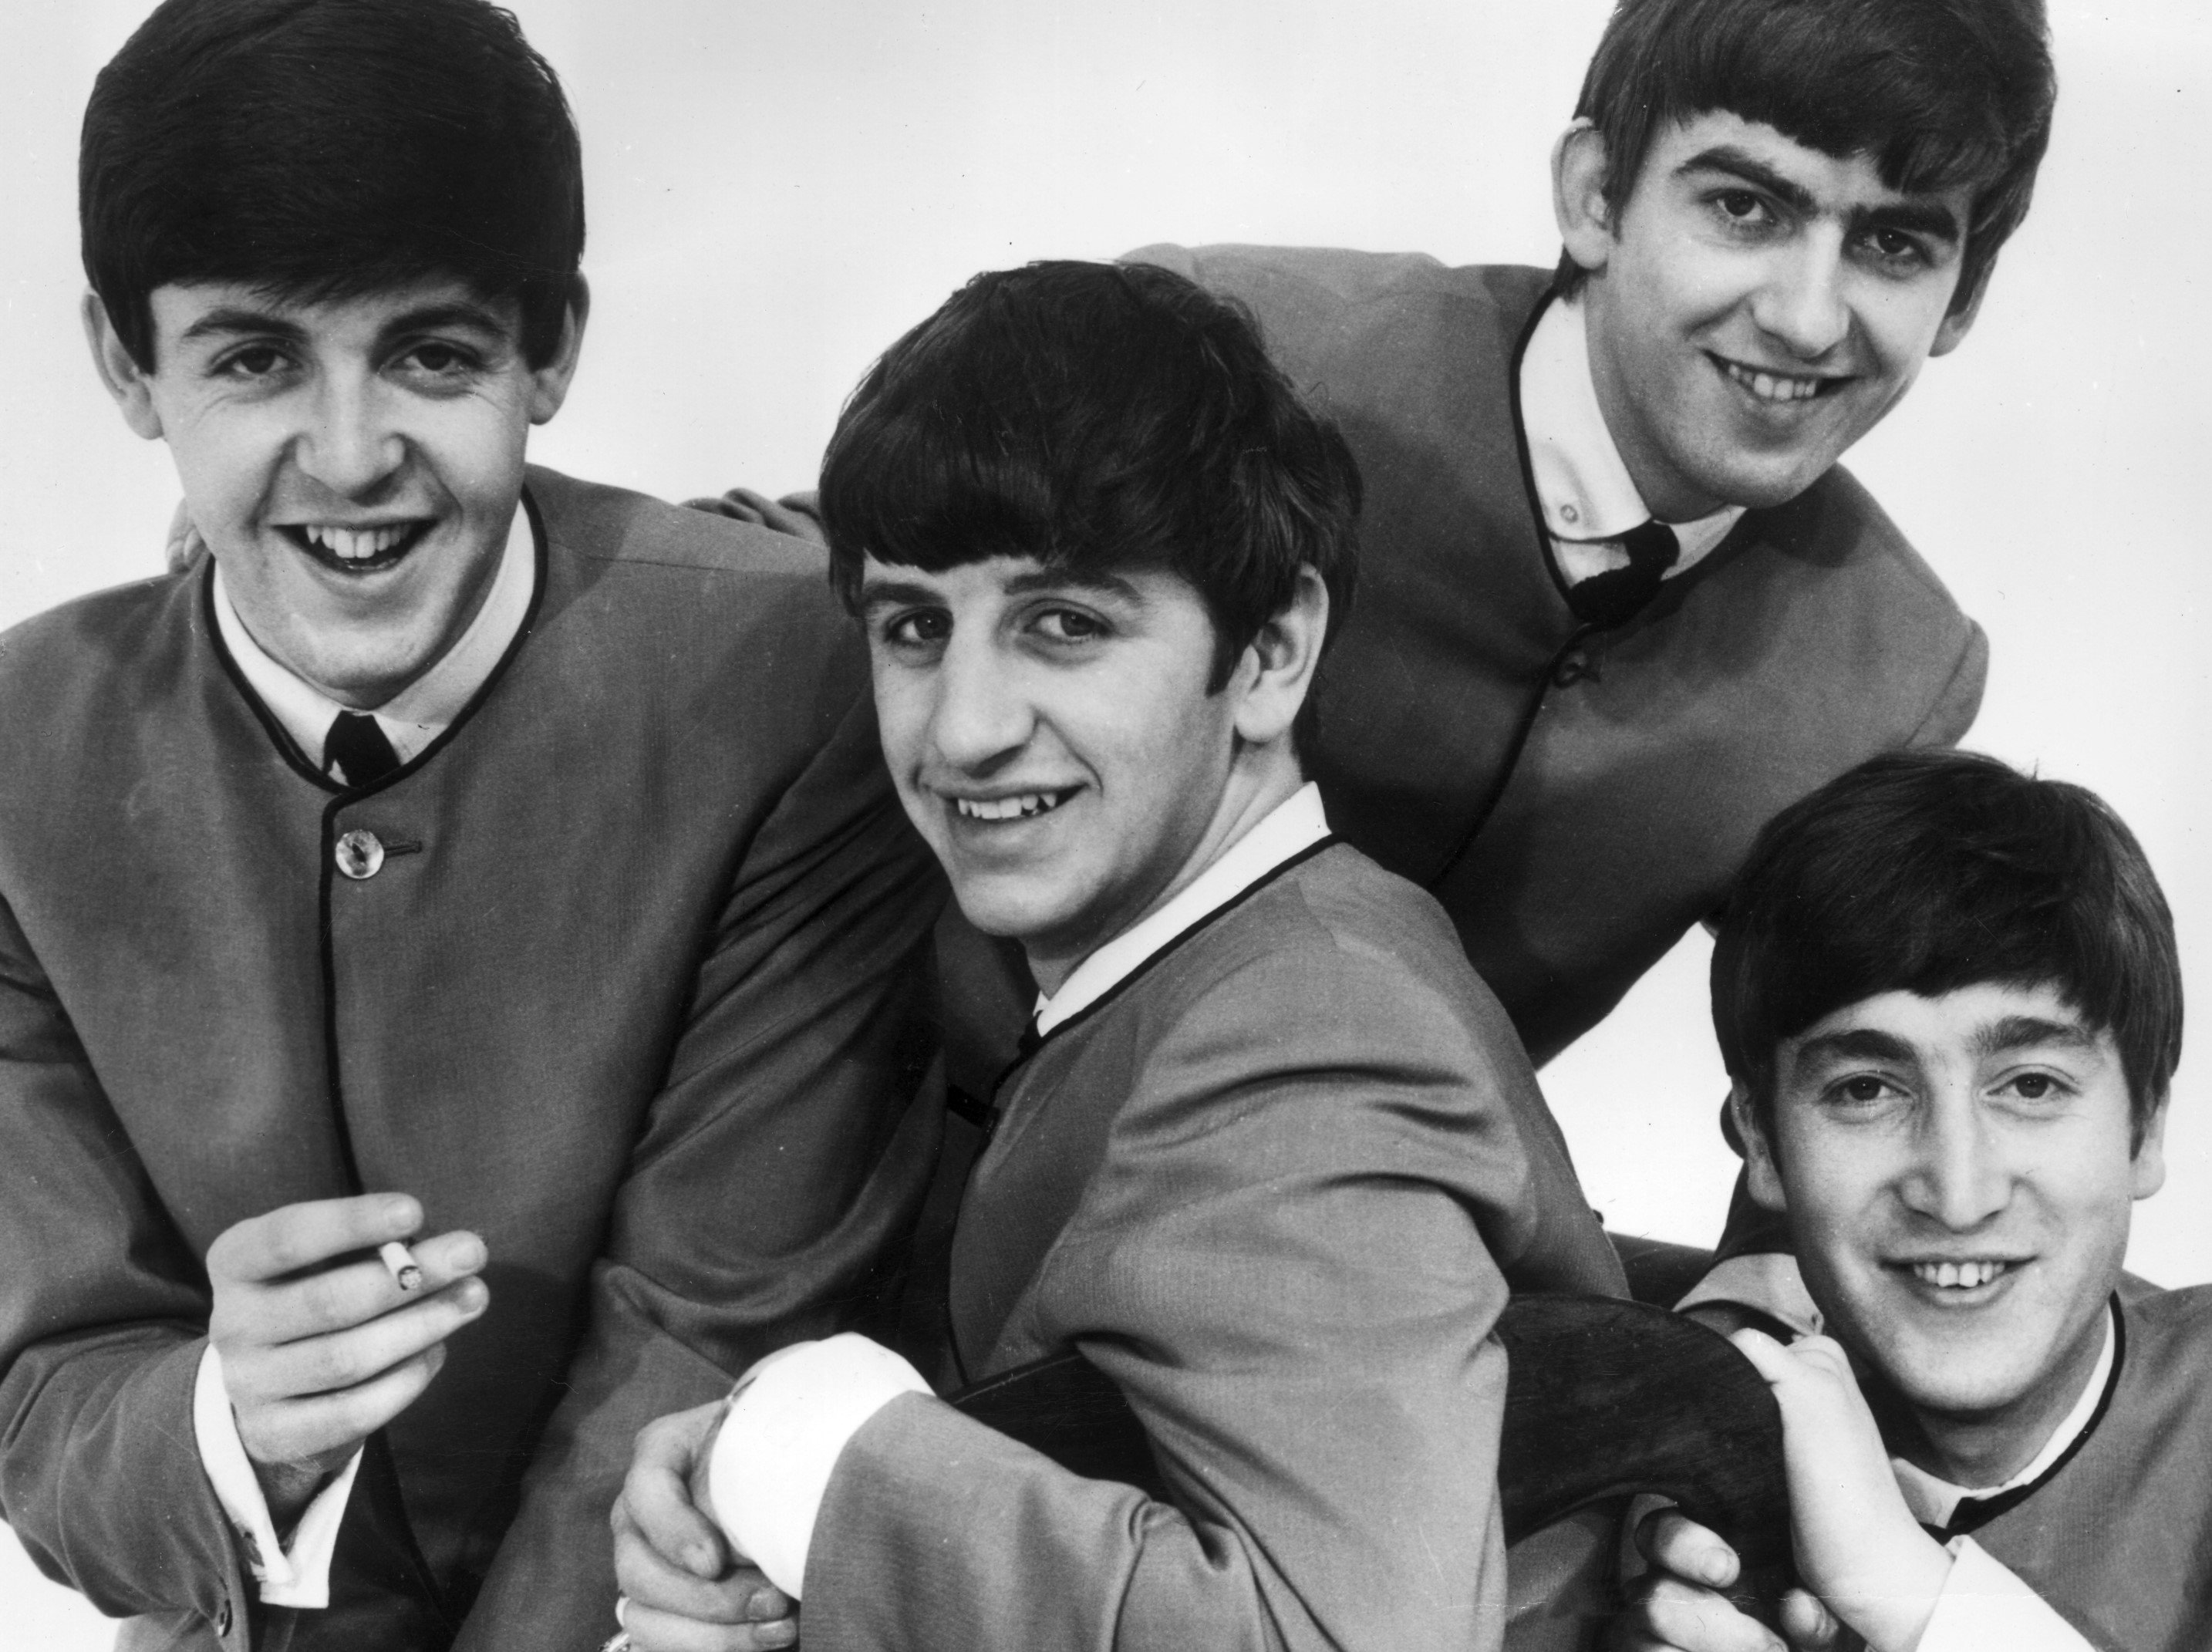 The Beatles' Paul McCartney, Ringo Starr, George Harrison, and John Lennon in black-and-white